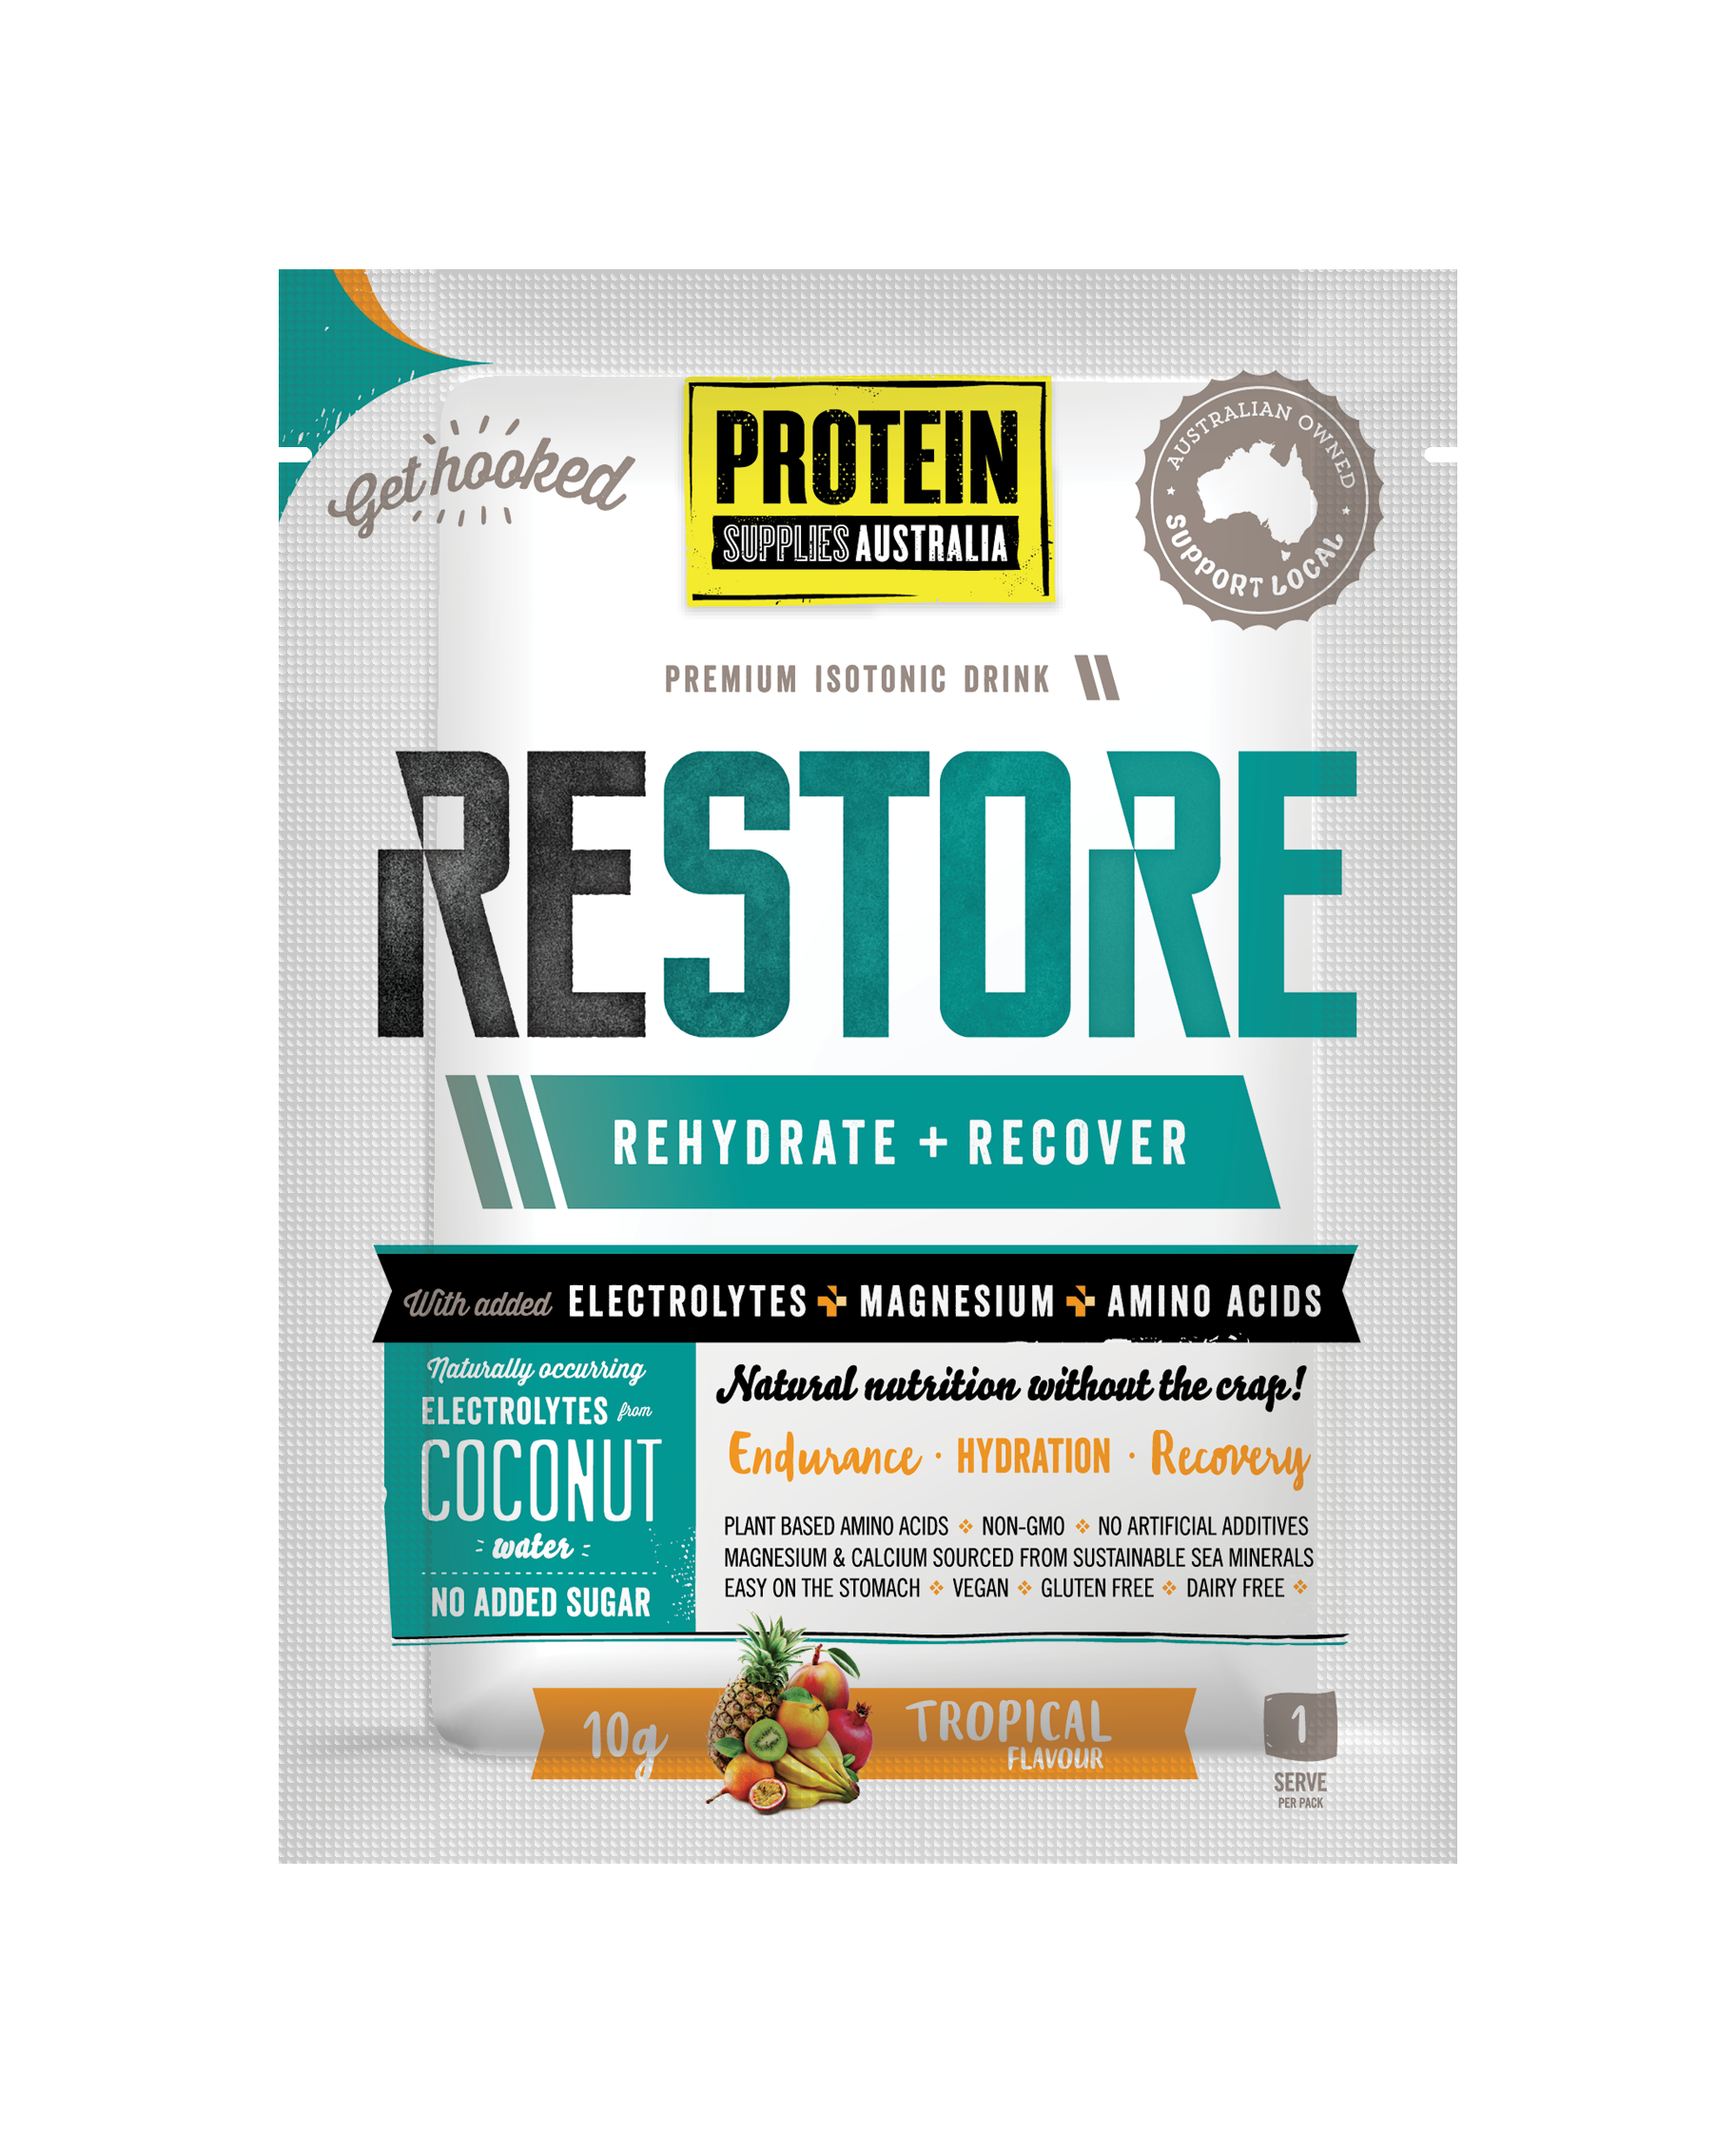 Restore Tropical - Protein Supplies Australia